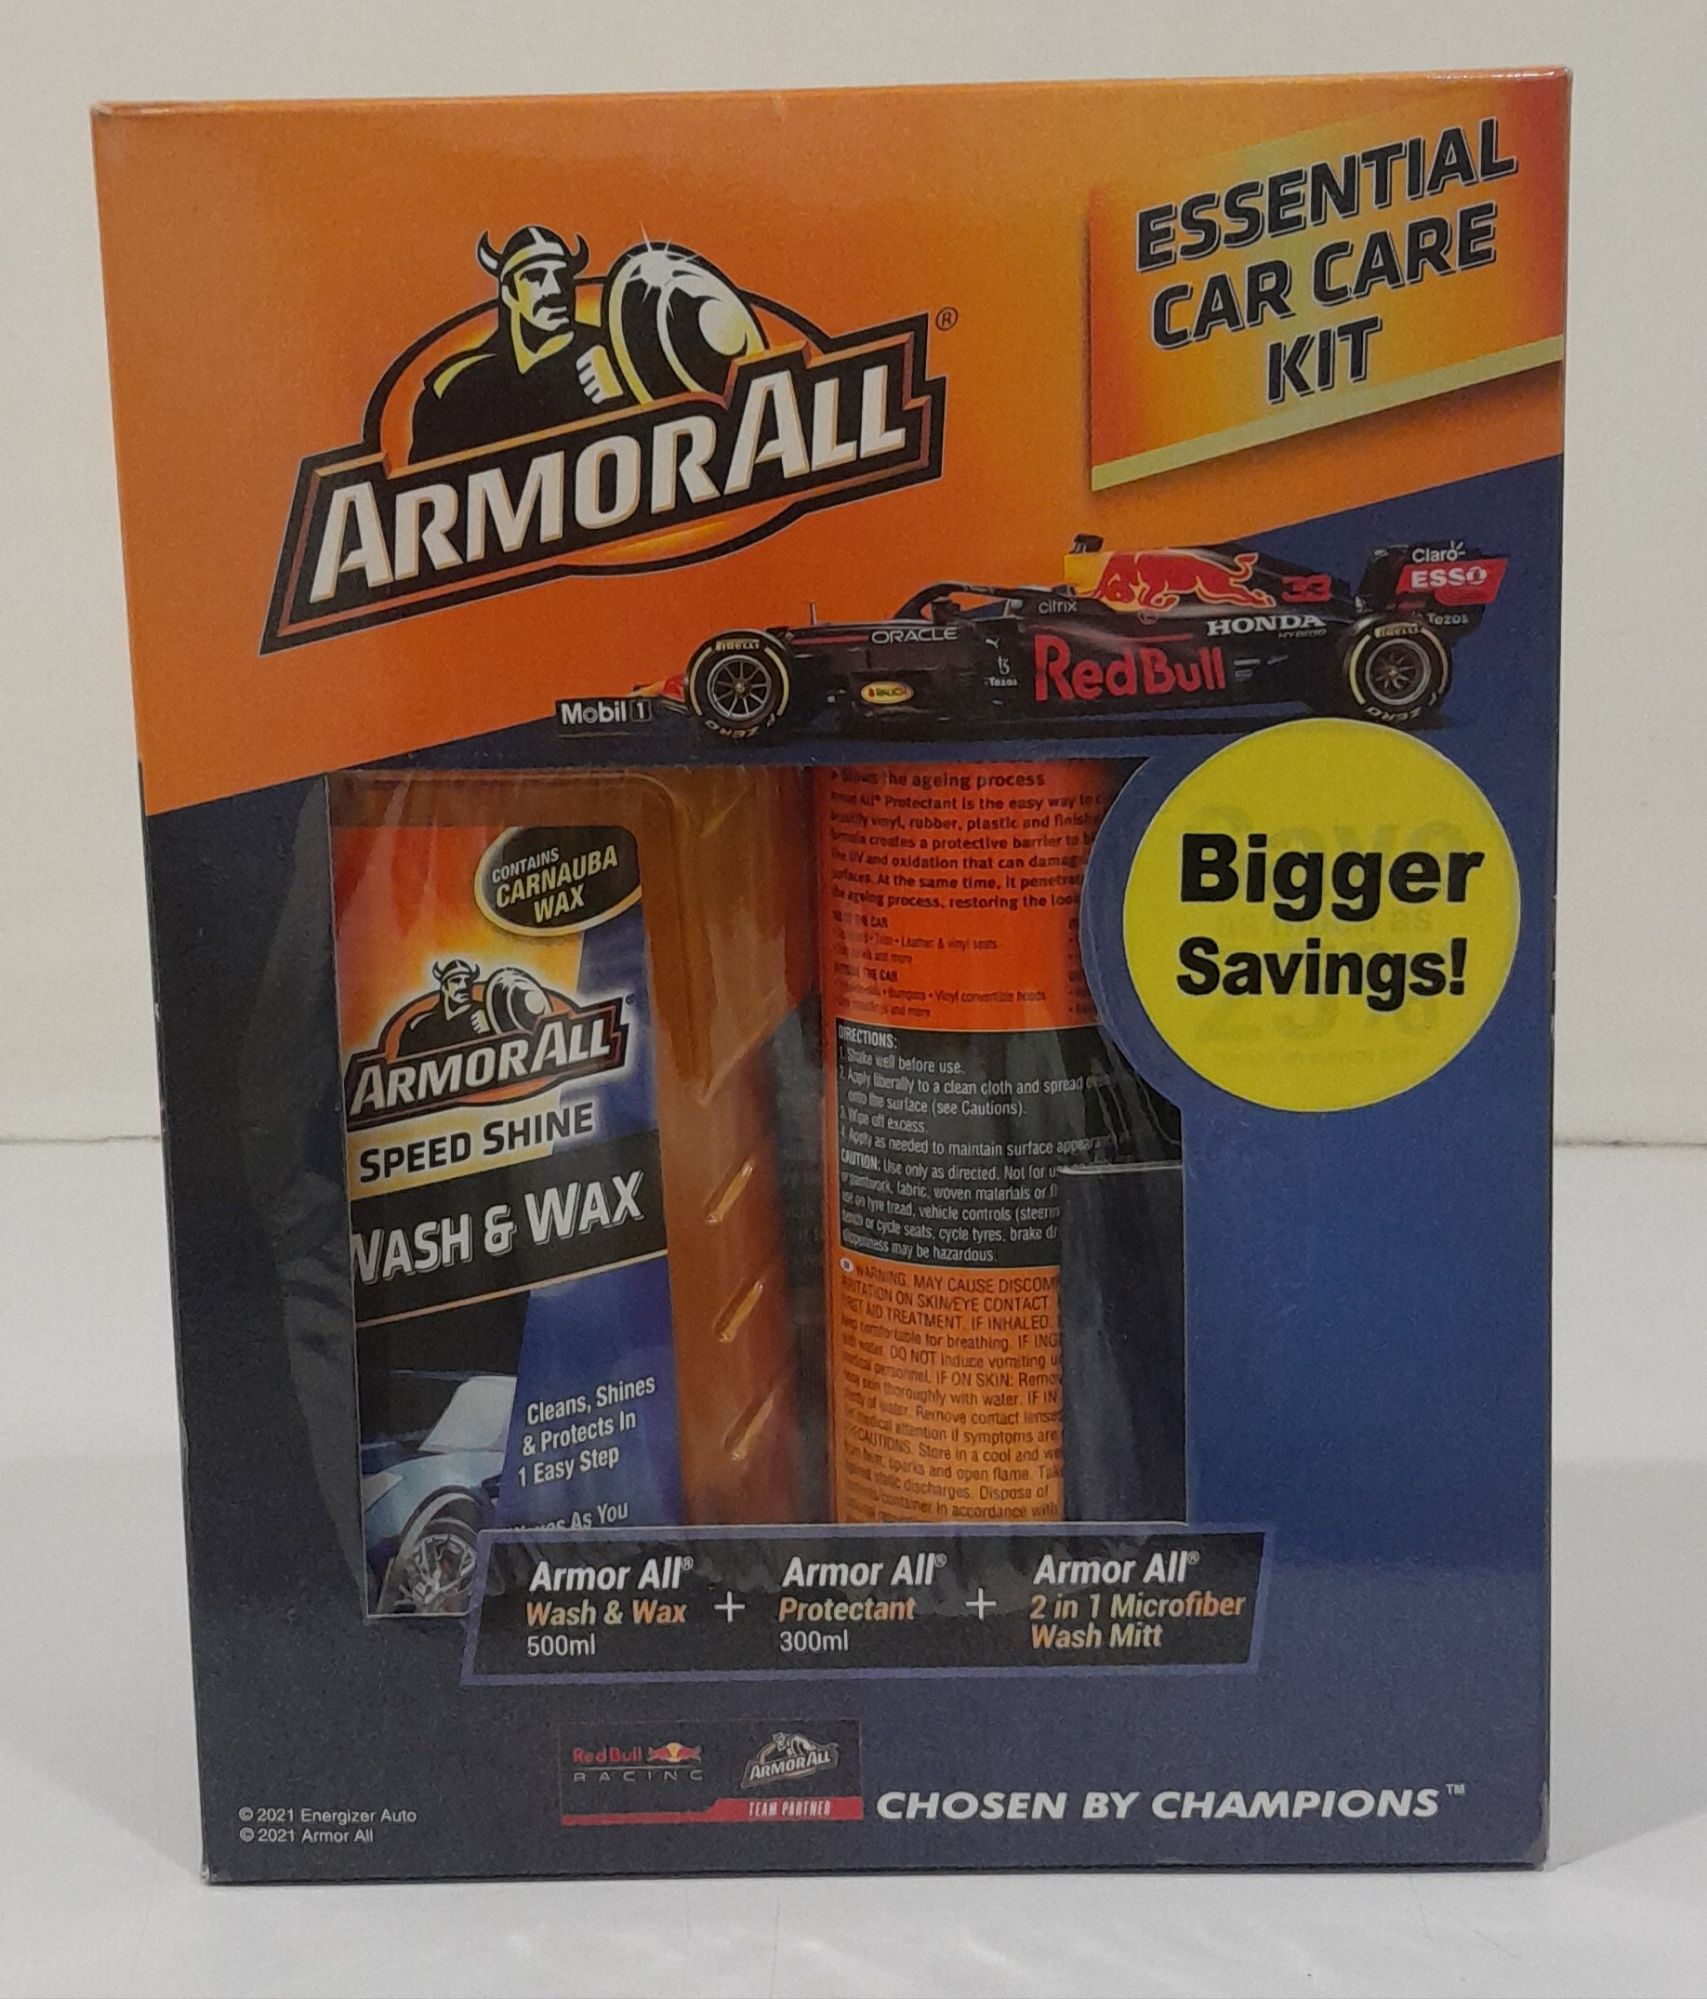 Armor All Essentials Kit